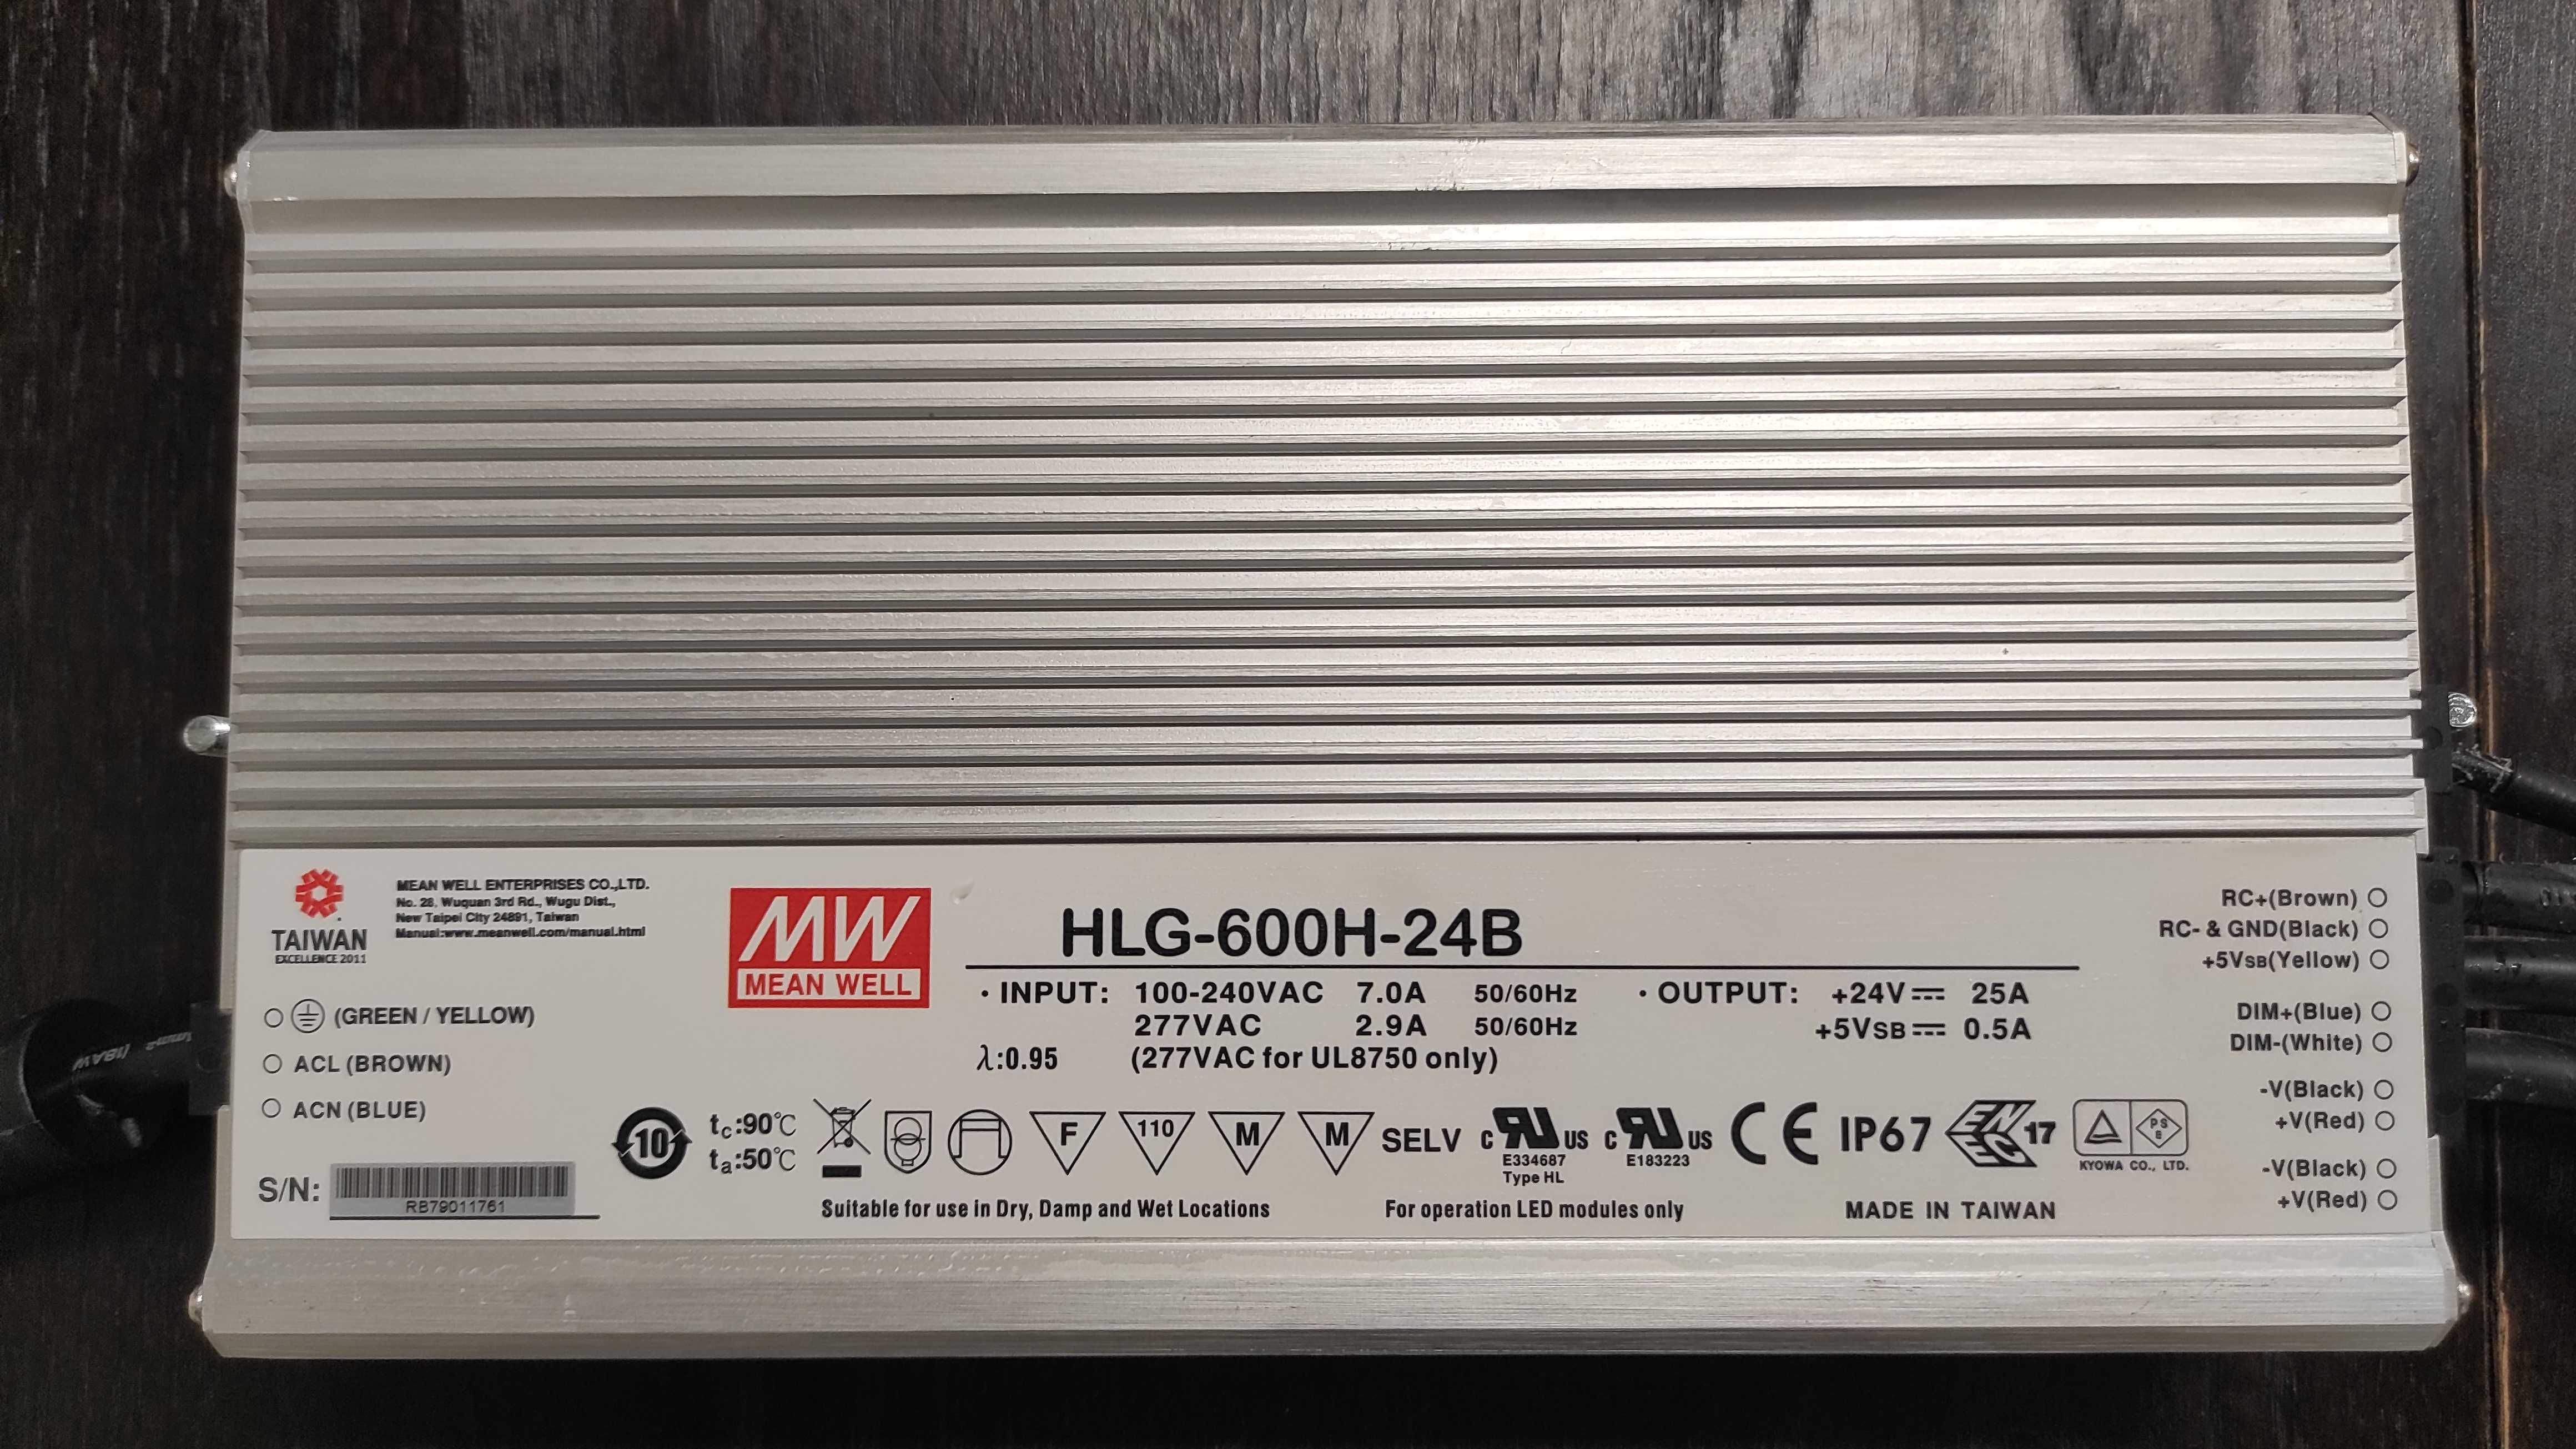 MEAN WELL HLG-600H-24B, AC/DC LED DRIVER блок питания для освещения